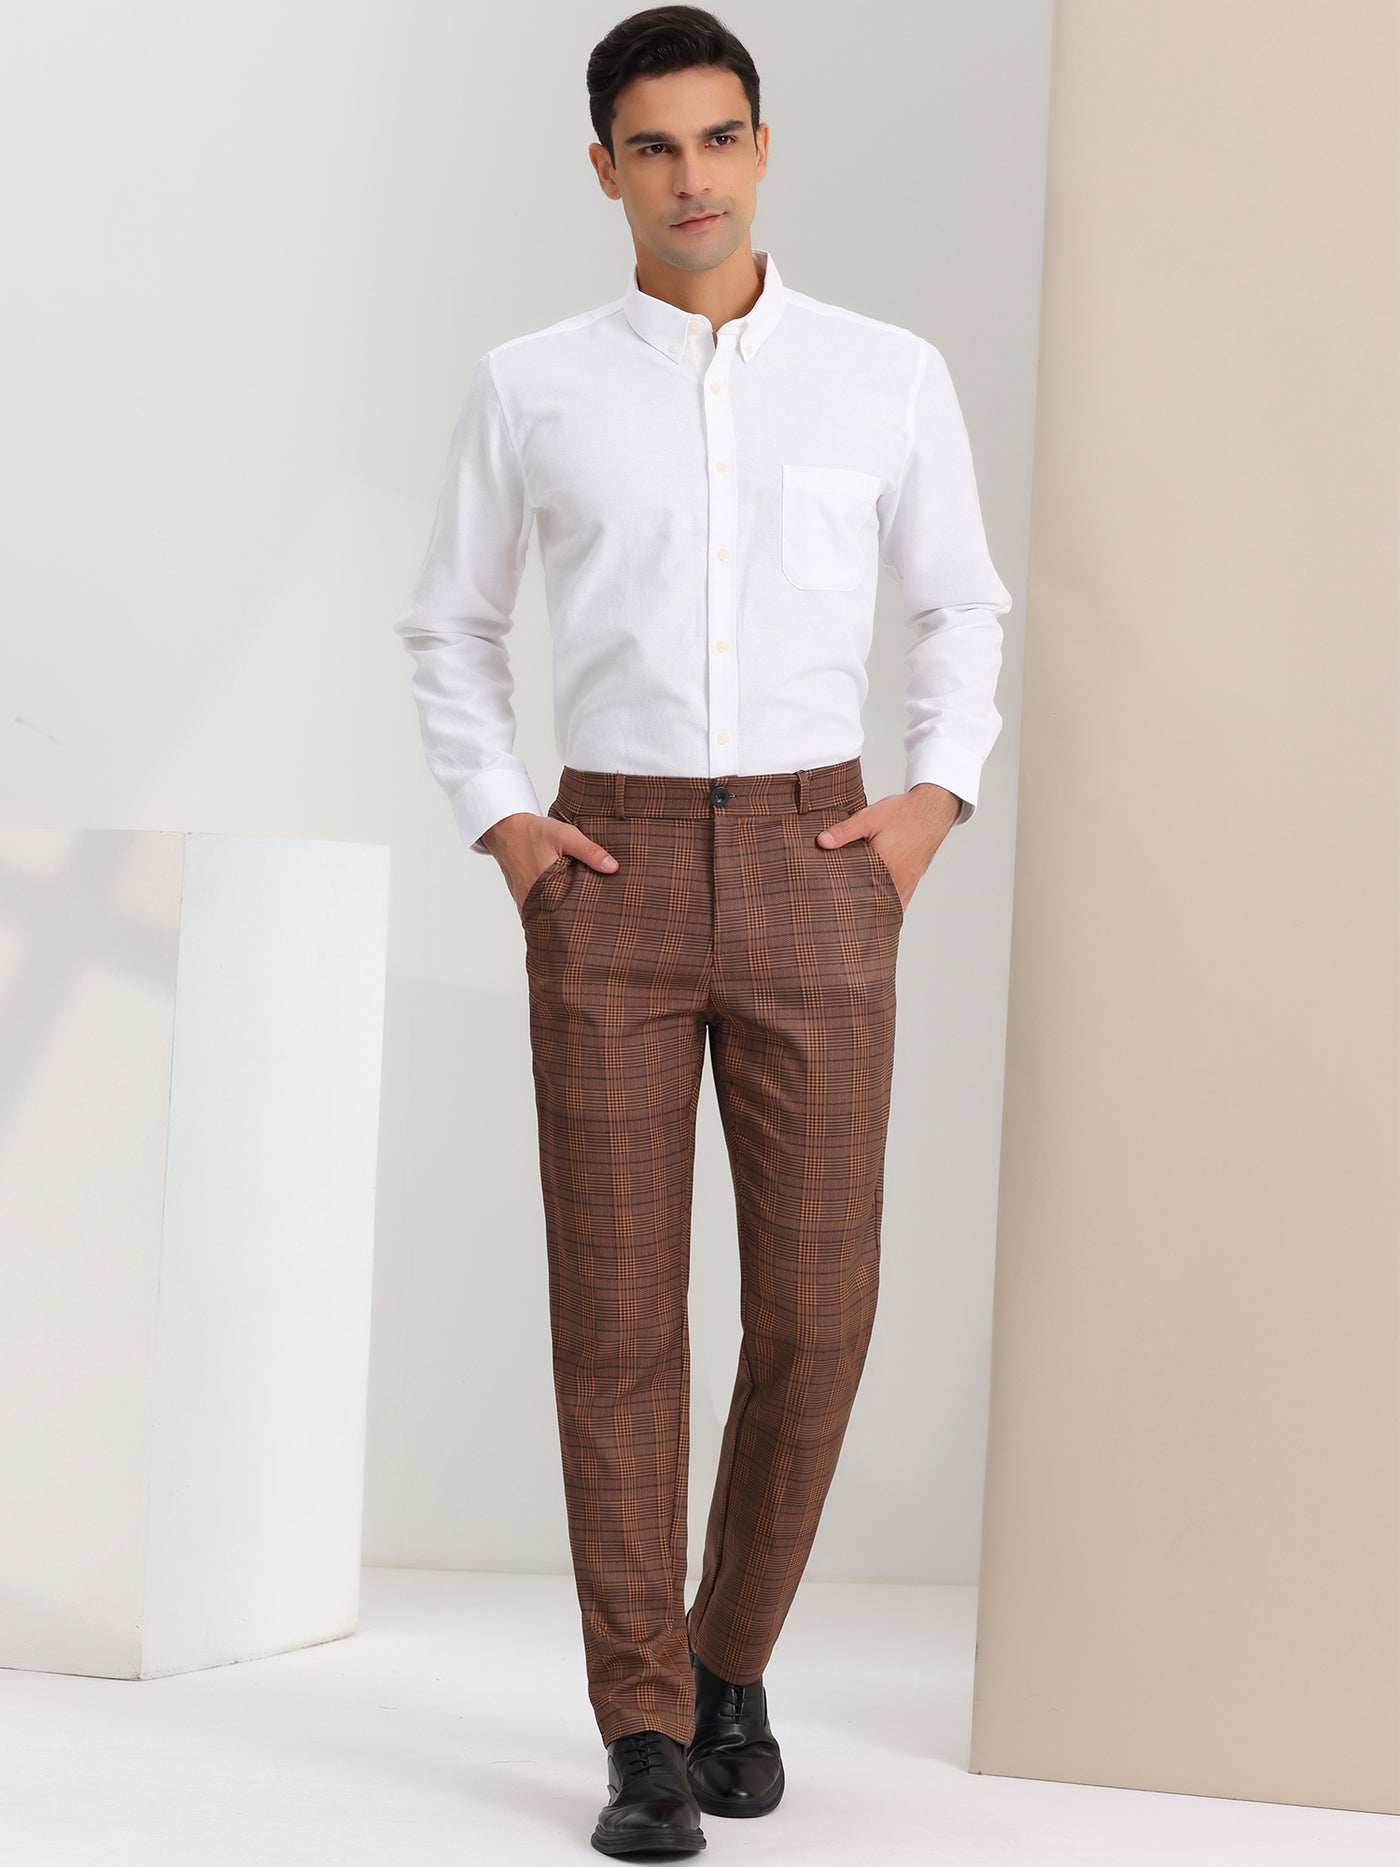 Bublédon Men's Checked Prom Trousers Regular Fit Formal Plaid Suit Pants